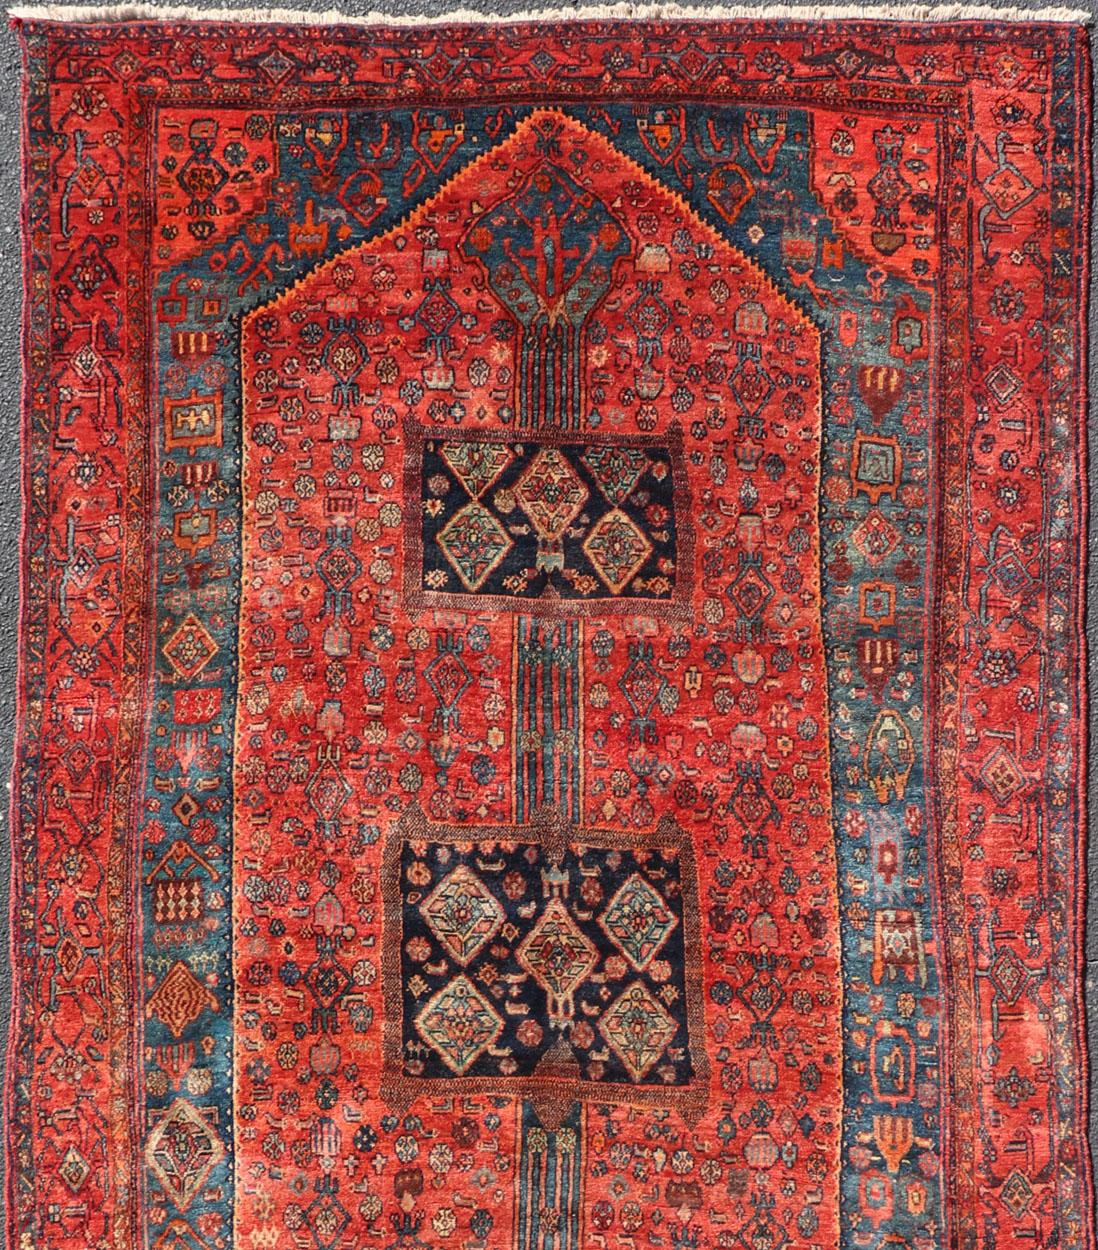 Antique Gallery Bidjar rug with tribal Design, Keivan Woven Arts/ rug/PTA-21021 country of origin / type : Persan / Bidjar, circa mid-20th Century.

Mesures : 5'5 x 13'3.

Fabriqué dans la région du Kurdistan de Perse, ce magnifique tapis ancien de